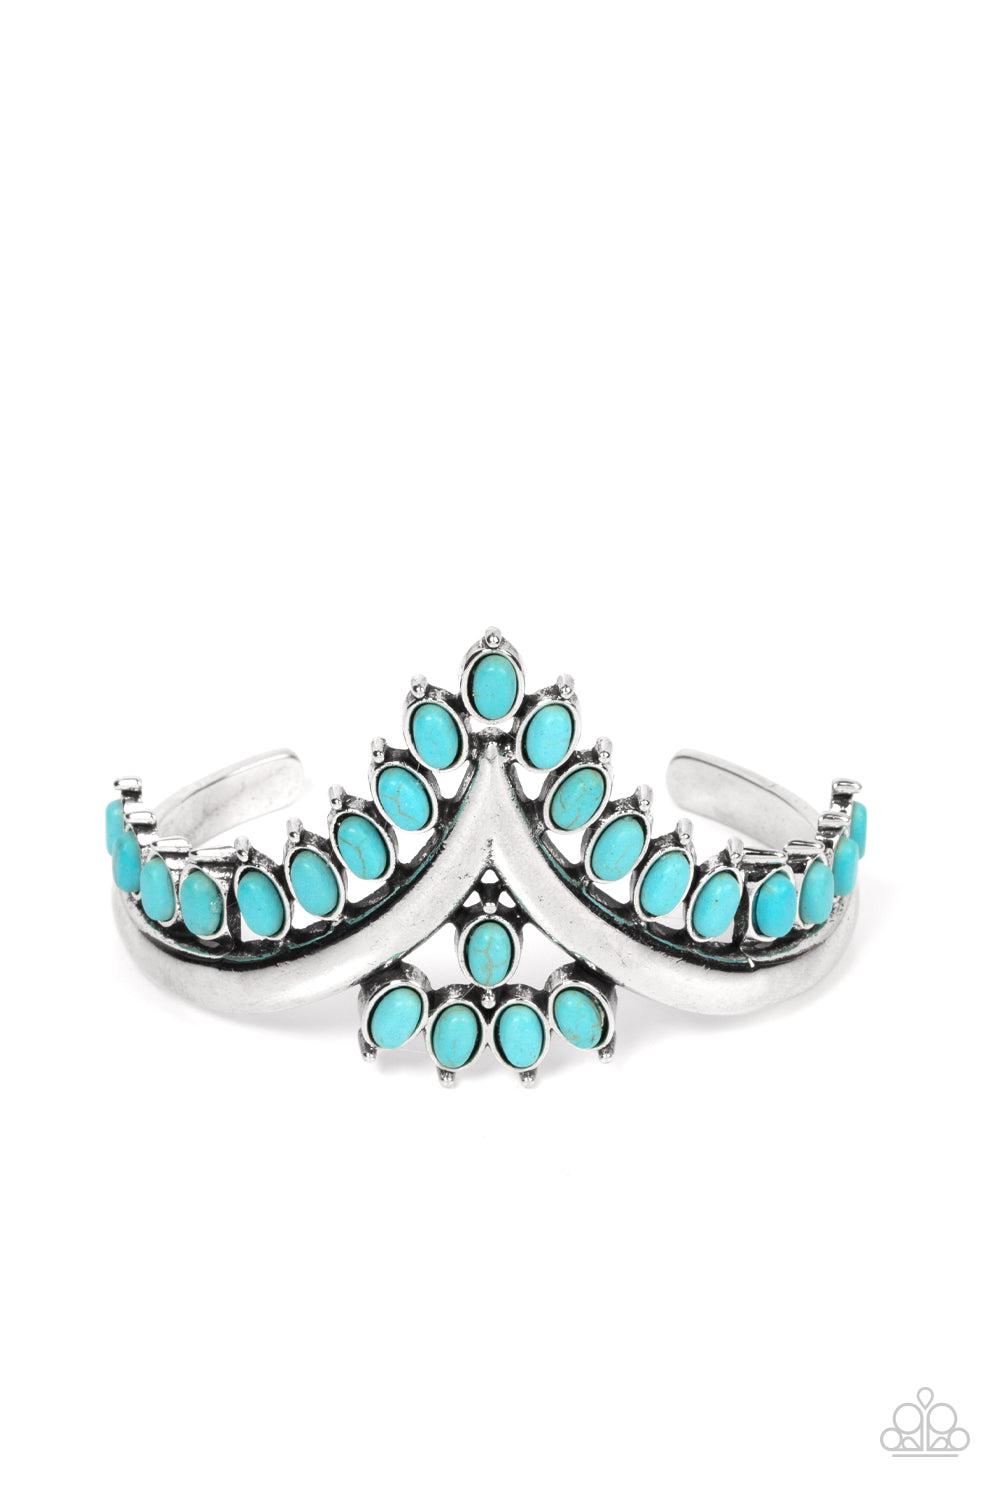 Teton Tiara Turquoise Blue Stone Cuff Bracelet - Paparazzi Accessories- lightbox - CarasShop.com - $5 Jewelry by Cara Jewels